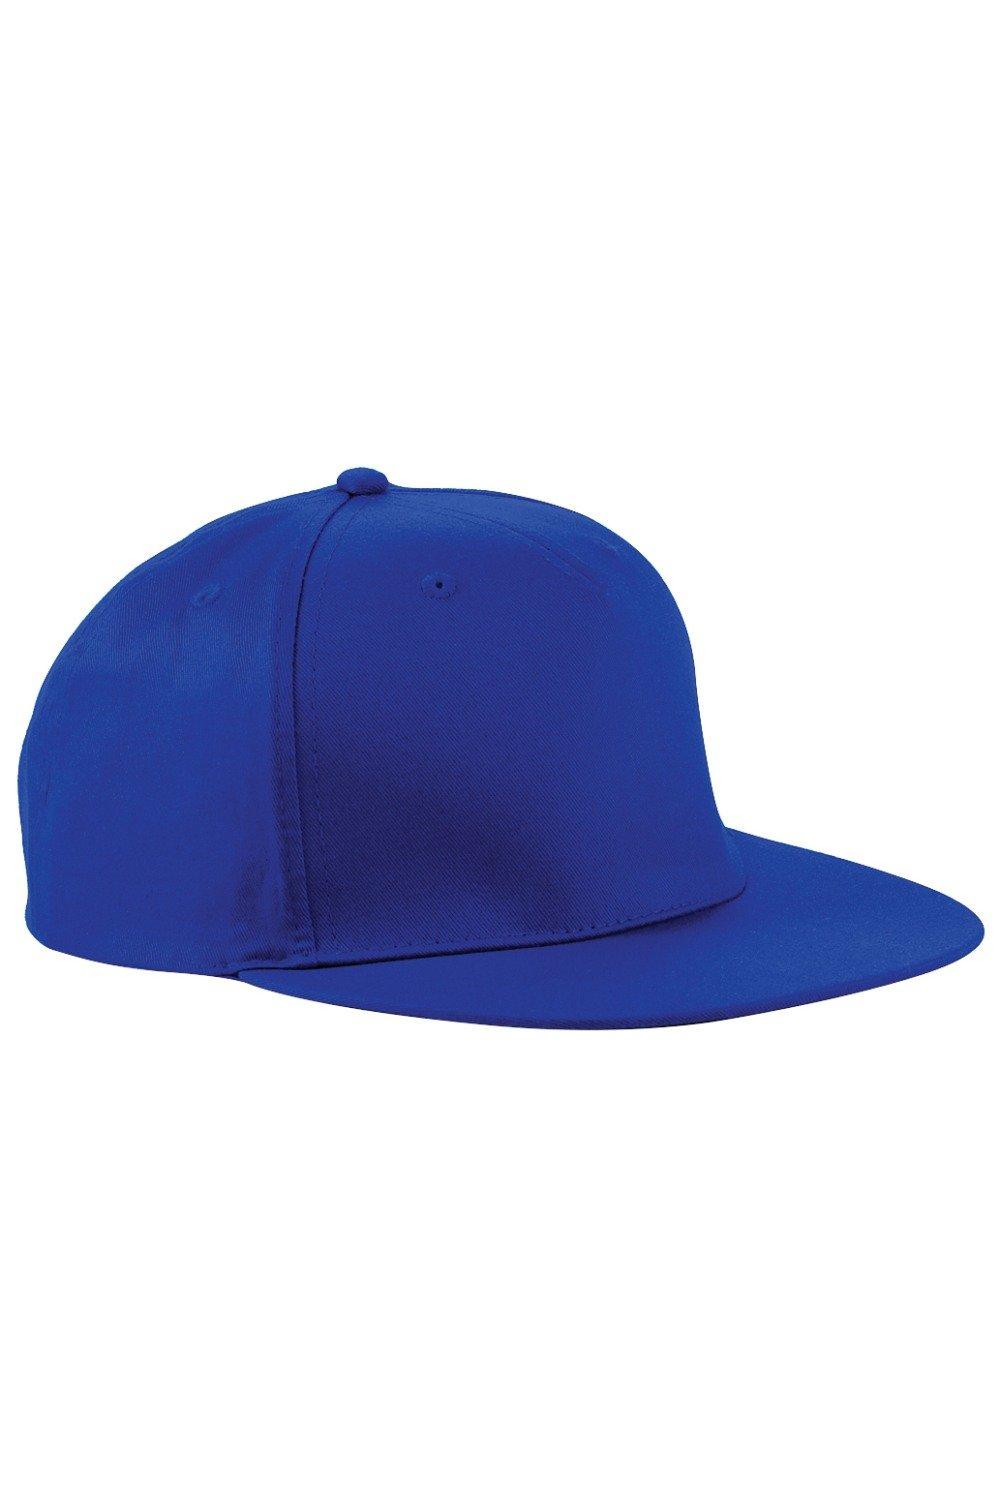 Пятипанельная кепка в стиле ретро (2 шт.) Beechfield, синий пика розовая жемчужина viatto bsb 12p бамбук 100 шт